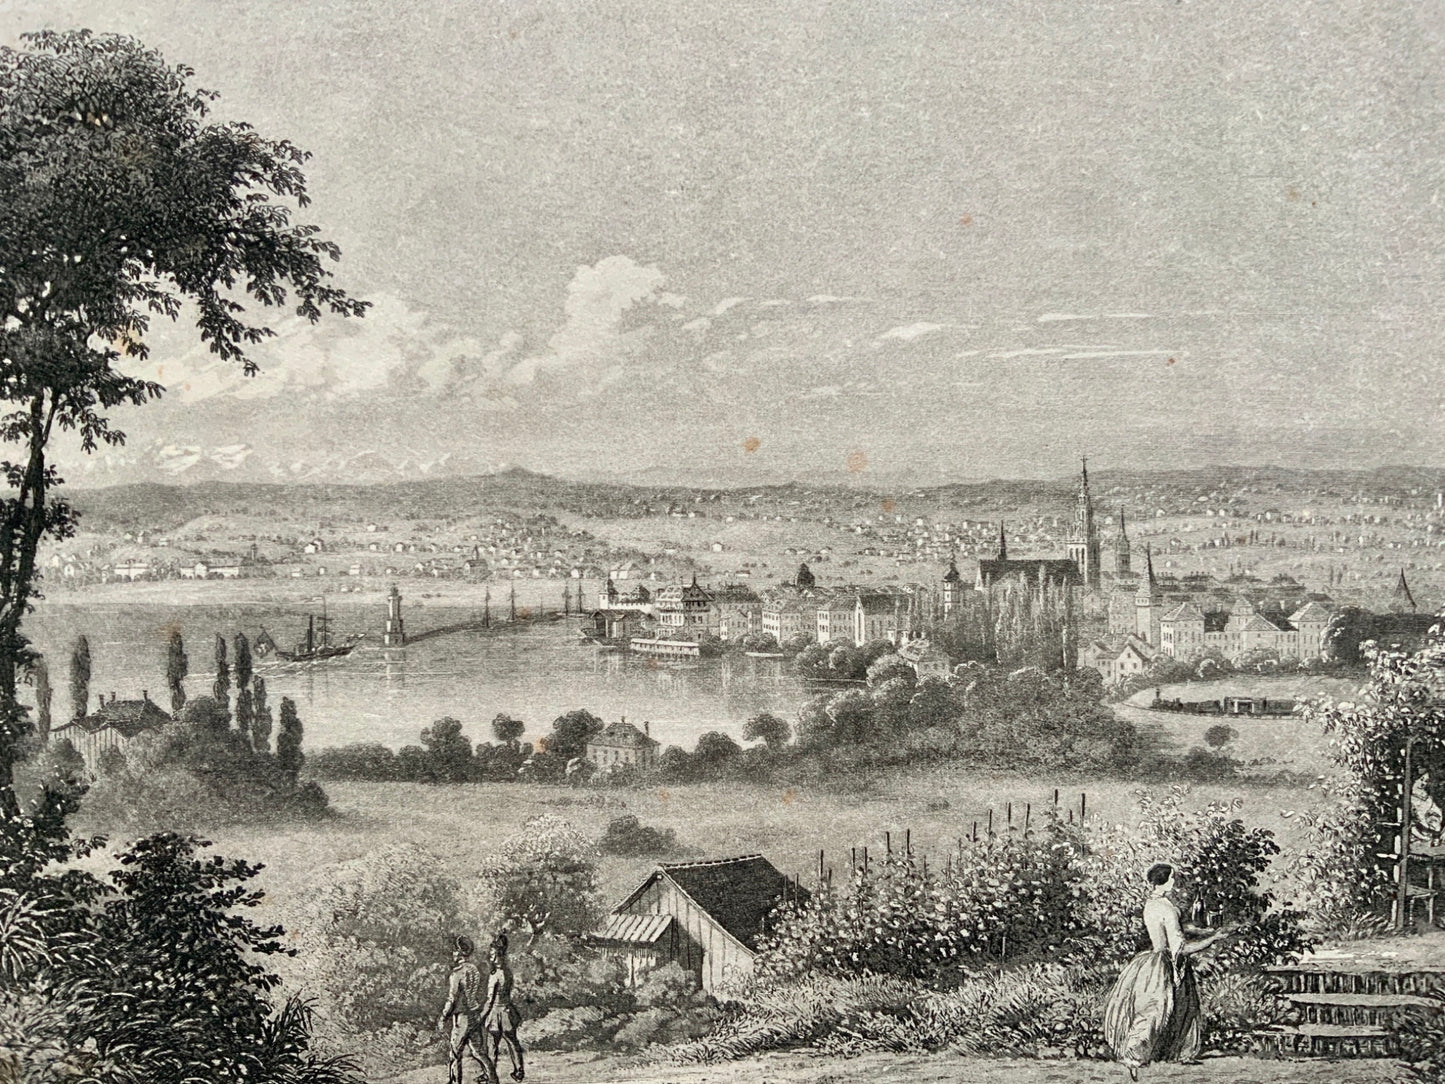 1850 c. Aquatint after Corradi - Constance, Konstanz, Bodensee, Germany - Travel